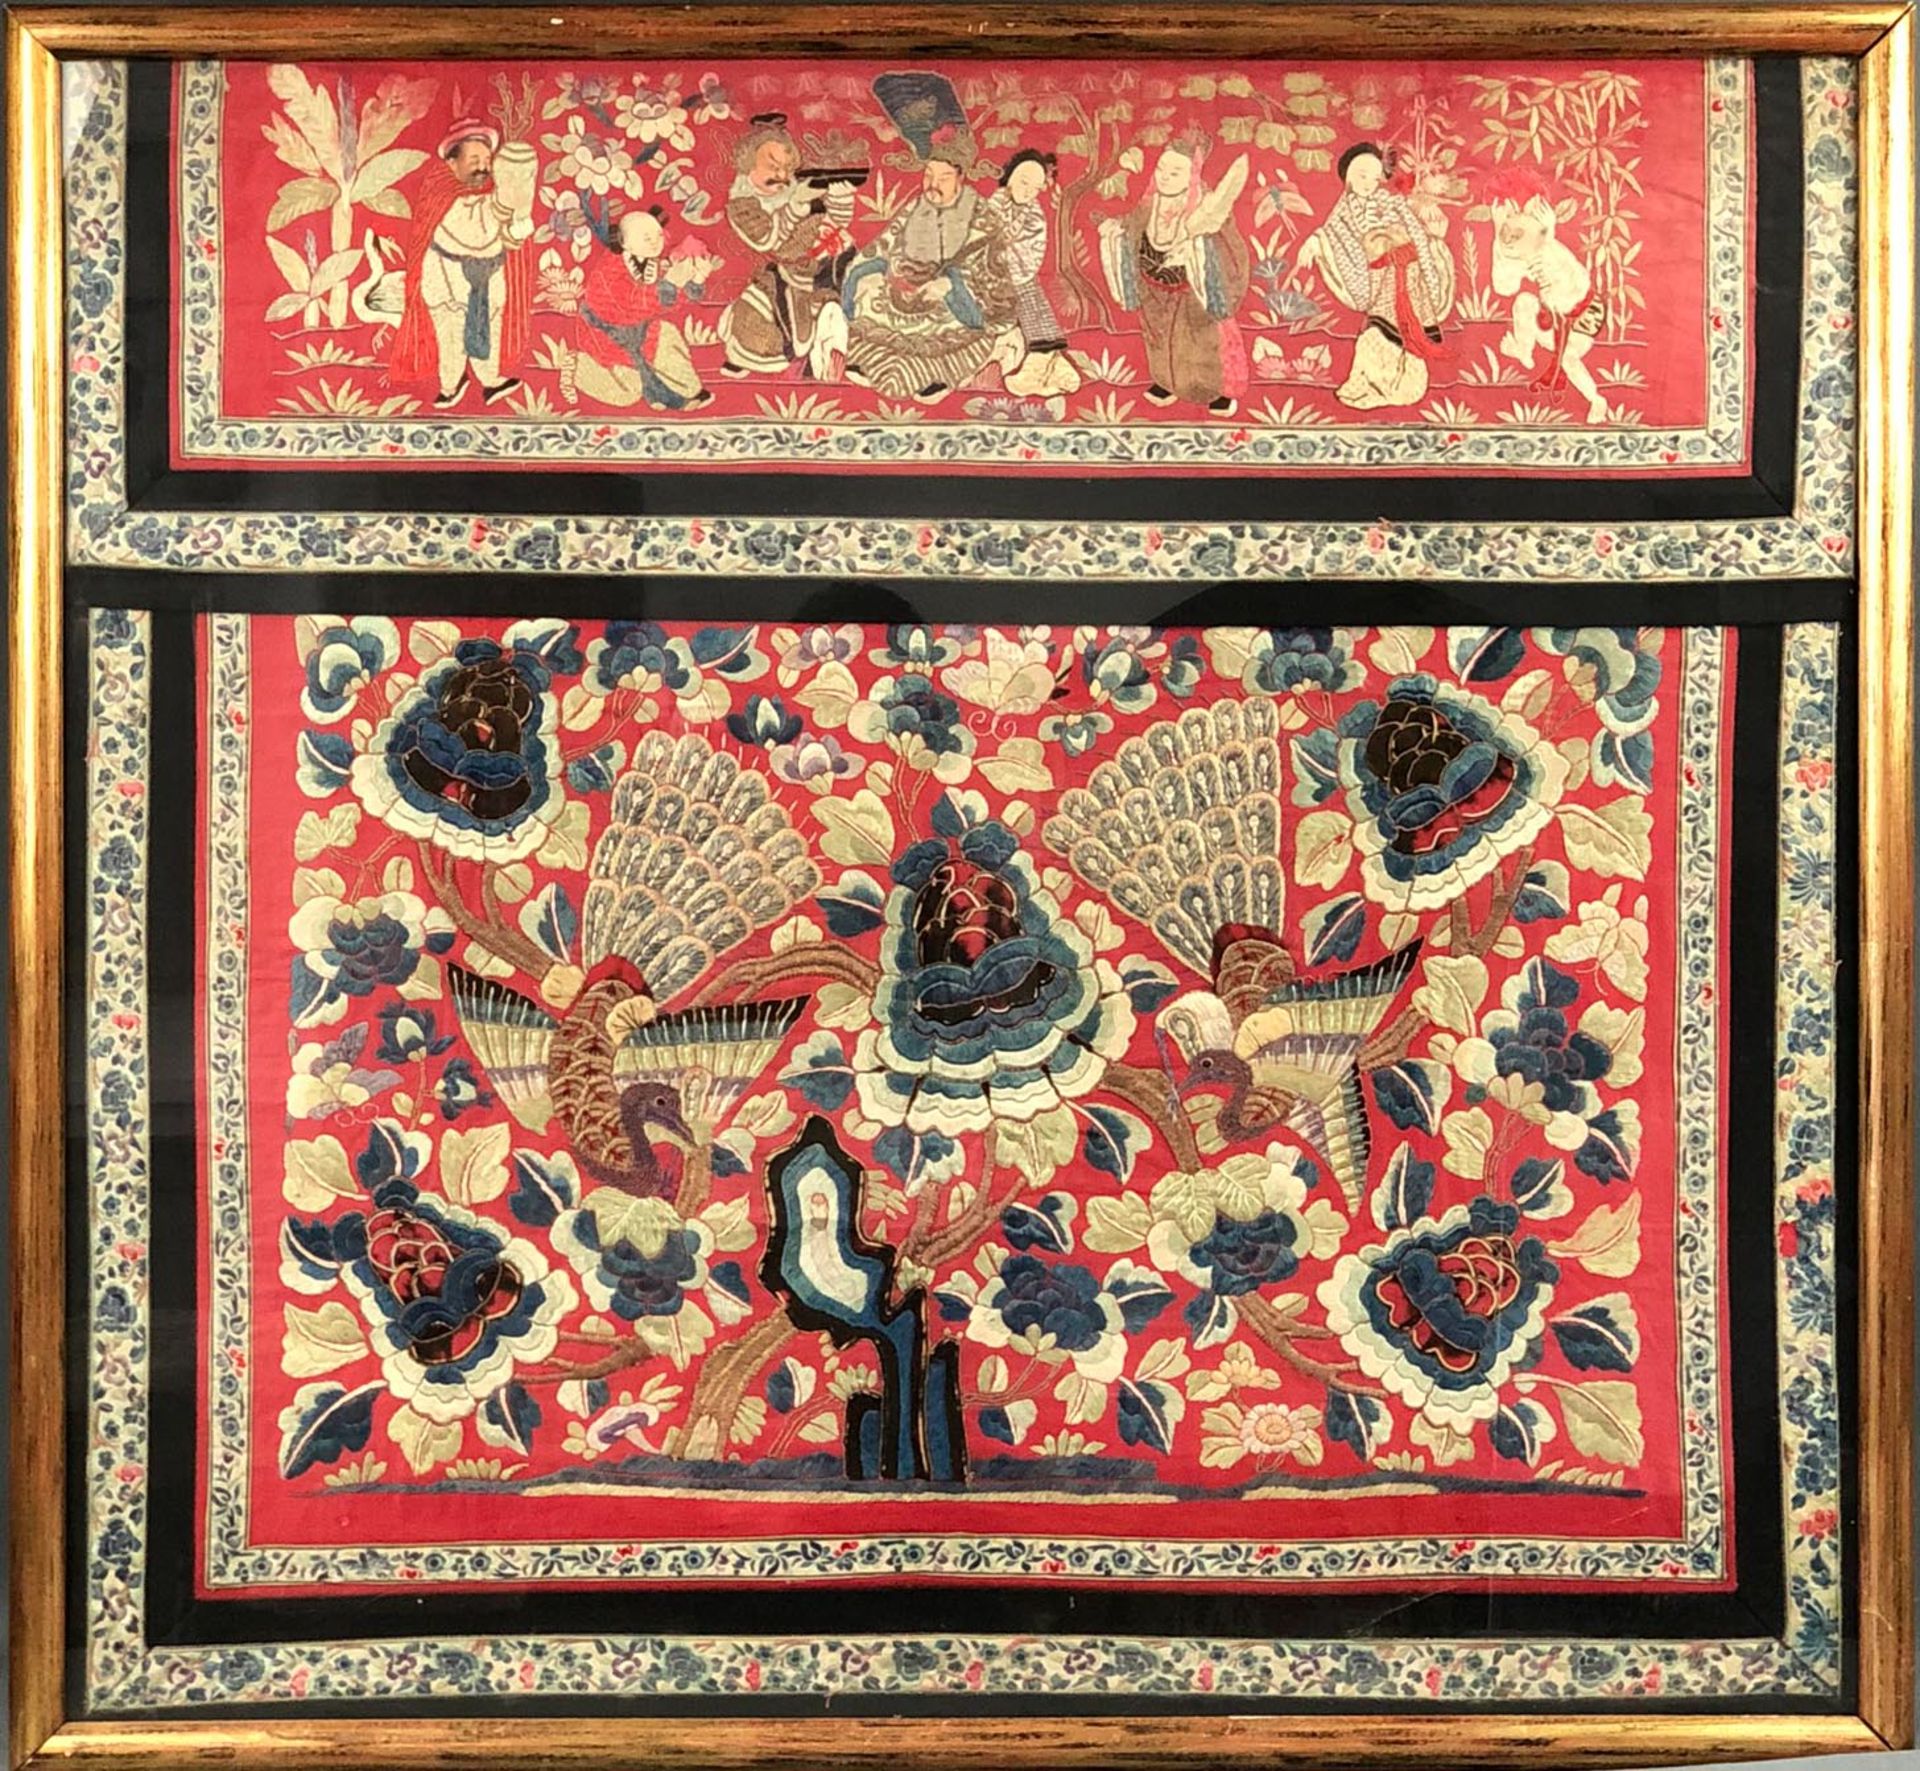 Behang. Seidenstickerei, Stumpwork. Wohl China 19. Jahrhundert.91,5 cm x 98 cm sichtbar. Hinten